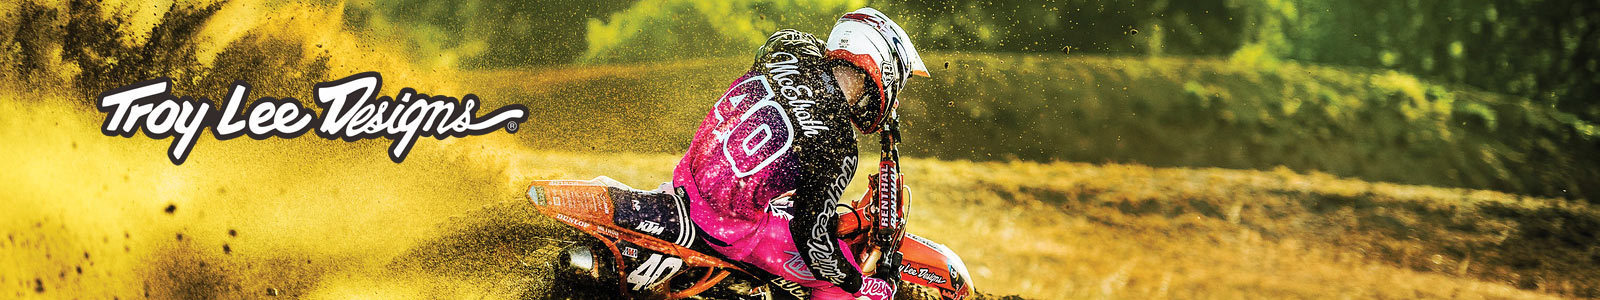 Troy-Lee-Designs-Motocross-Hosen